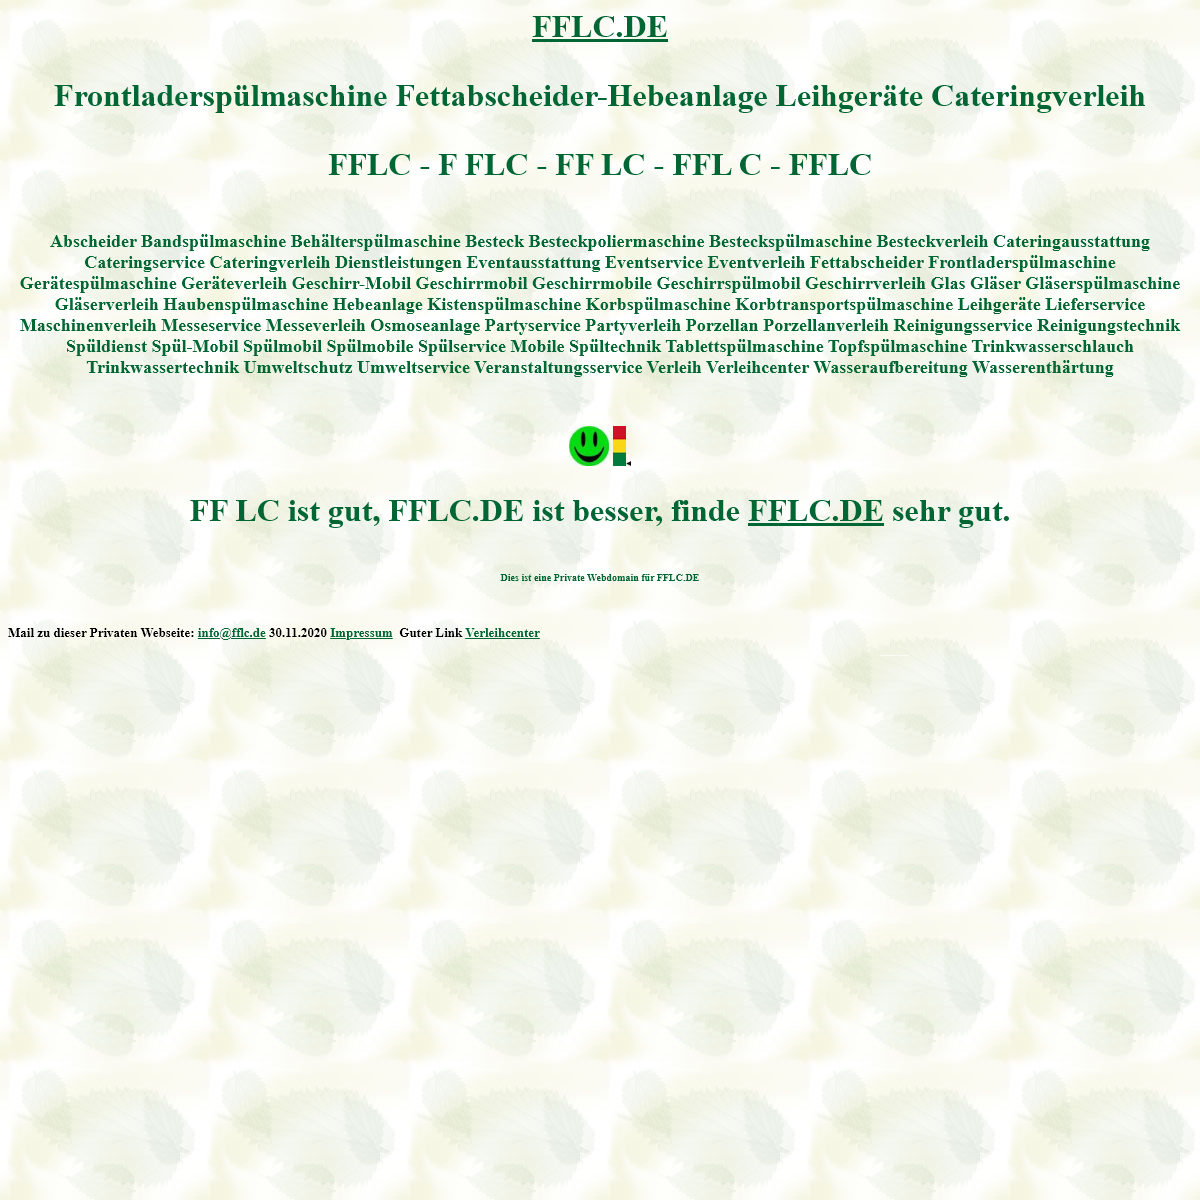 A complete backup of fflc.de